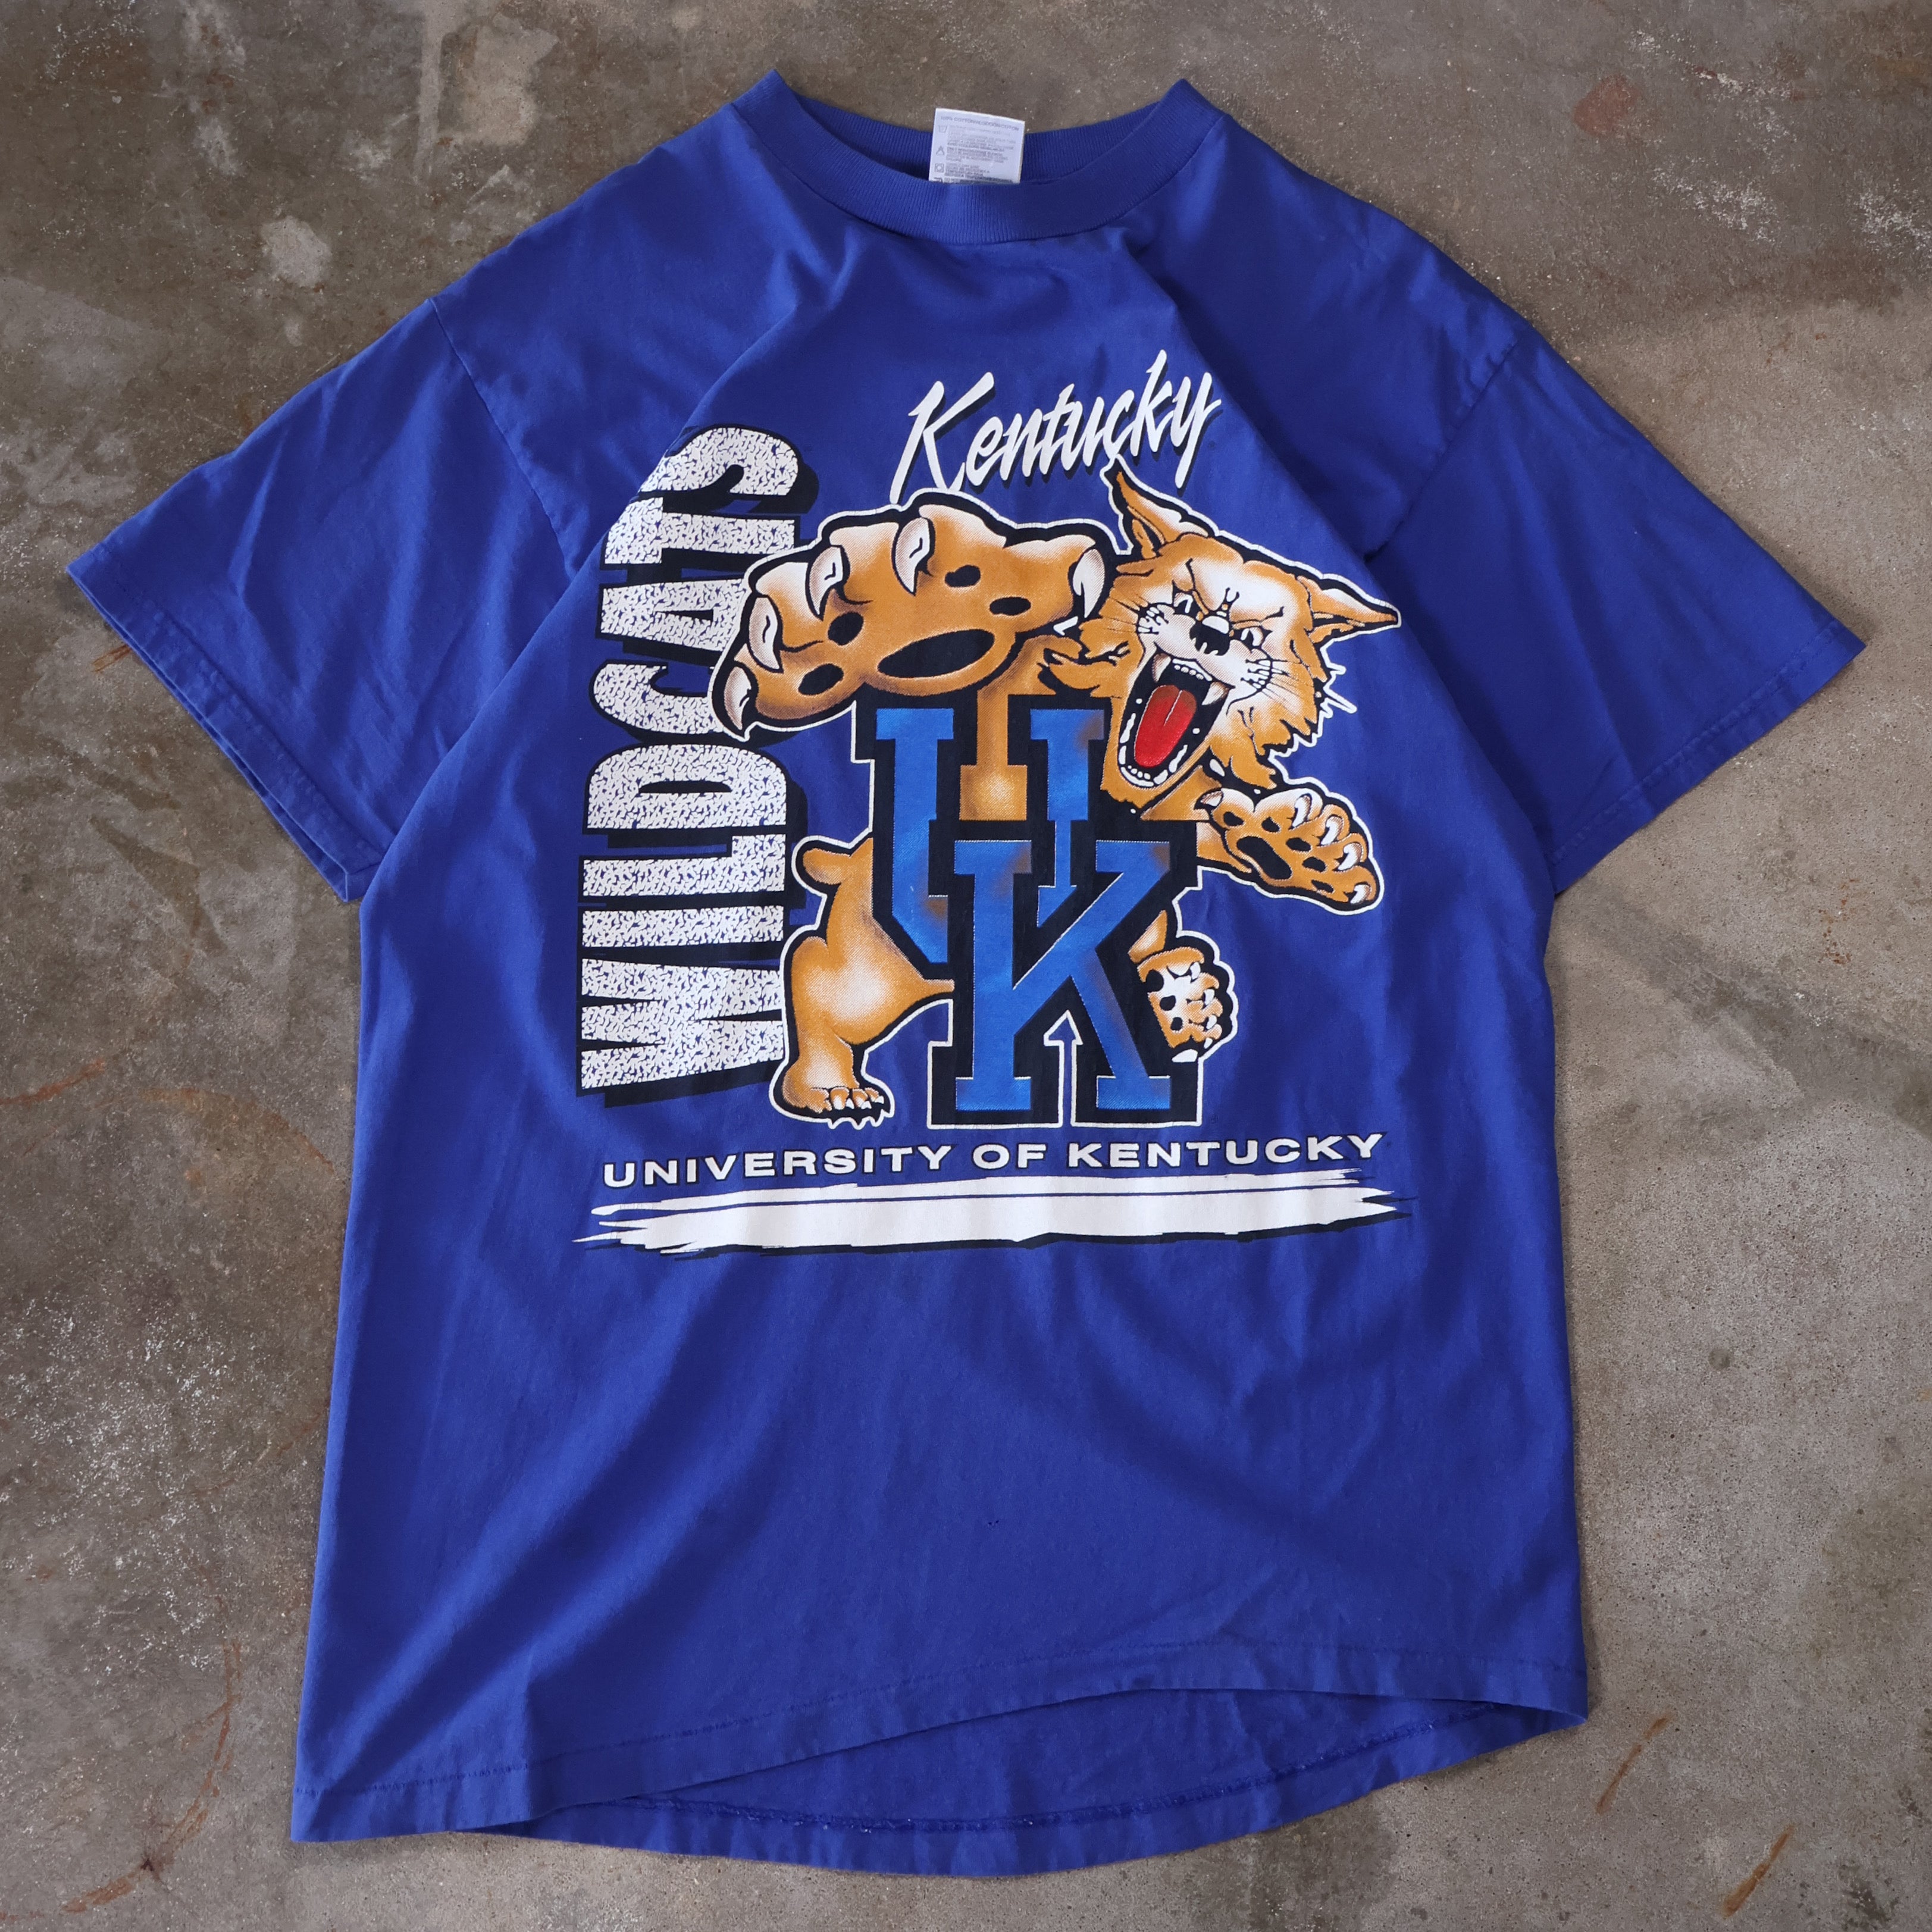 University of Kentucky Wildcats T-Shirt (Large)